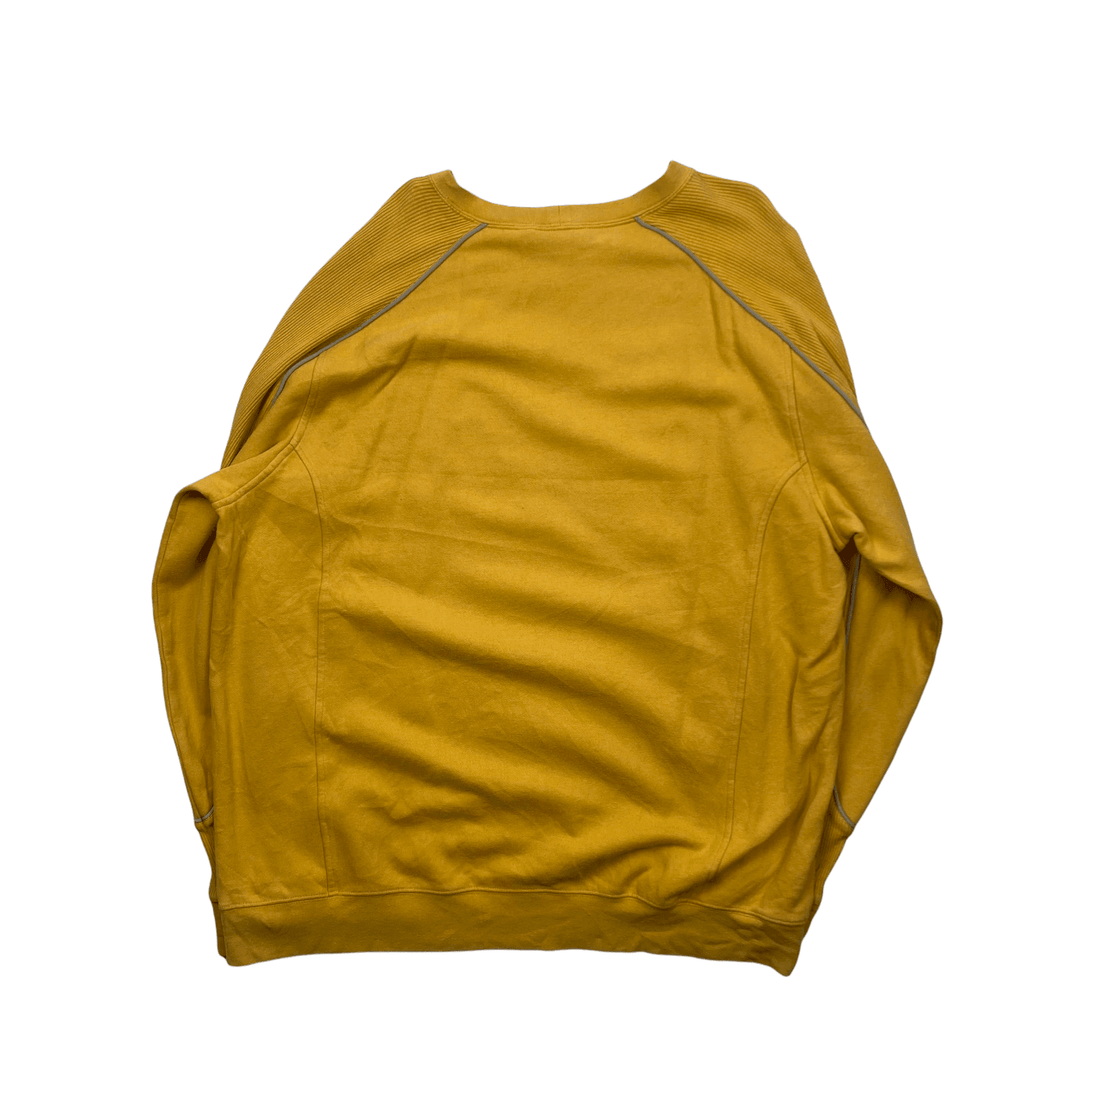 Vintage 90s Yellow Nike Sweatshirt - Extra Large - The Streetwear Studio